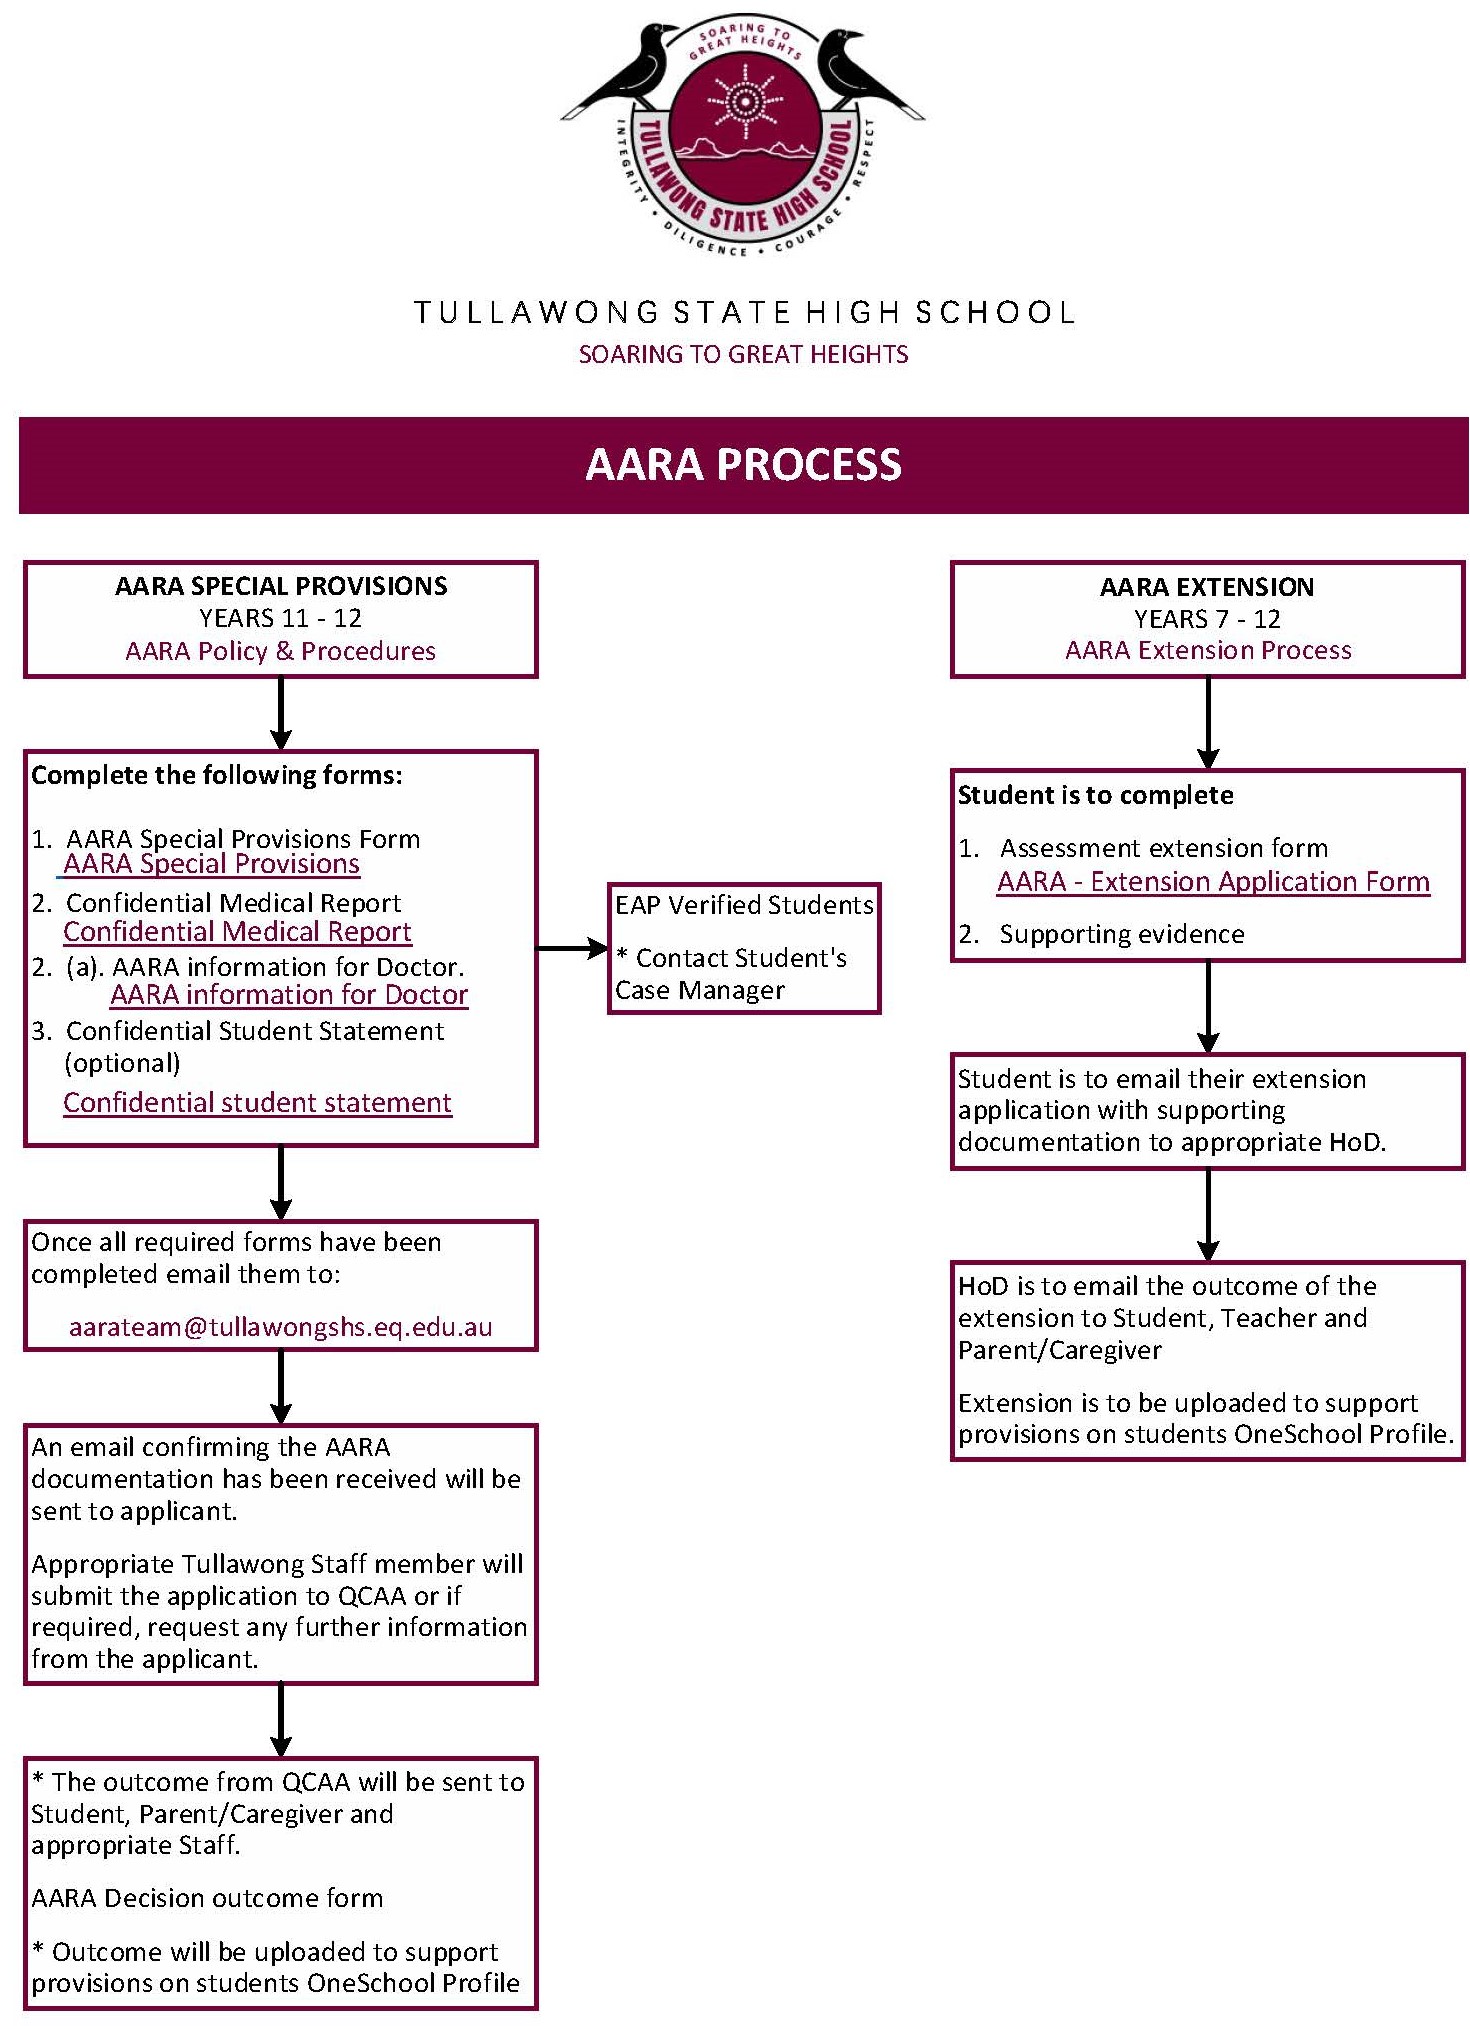 AARA Process Image